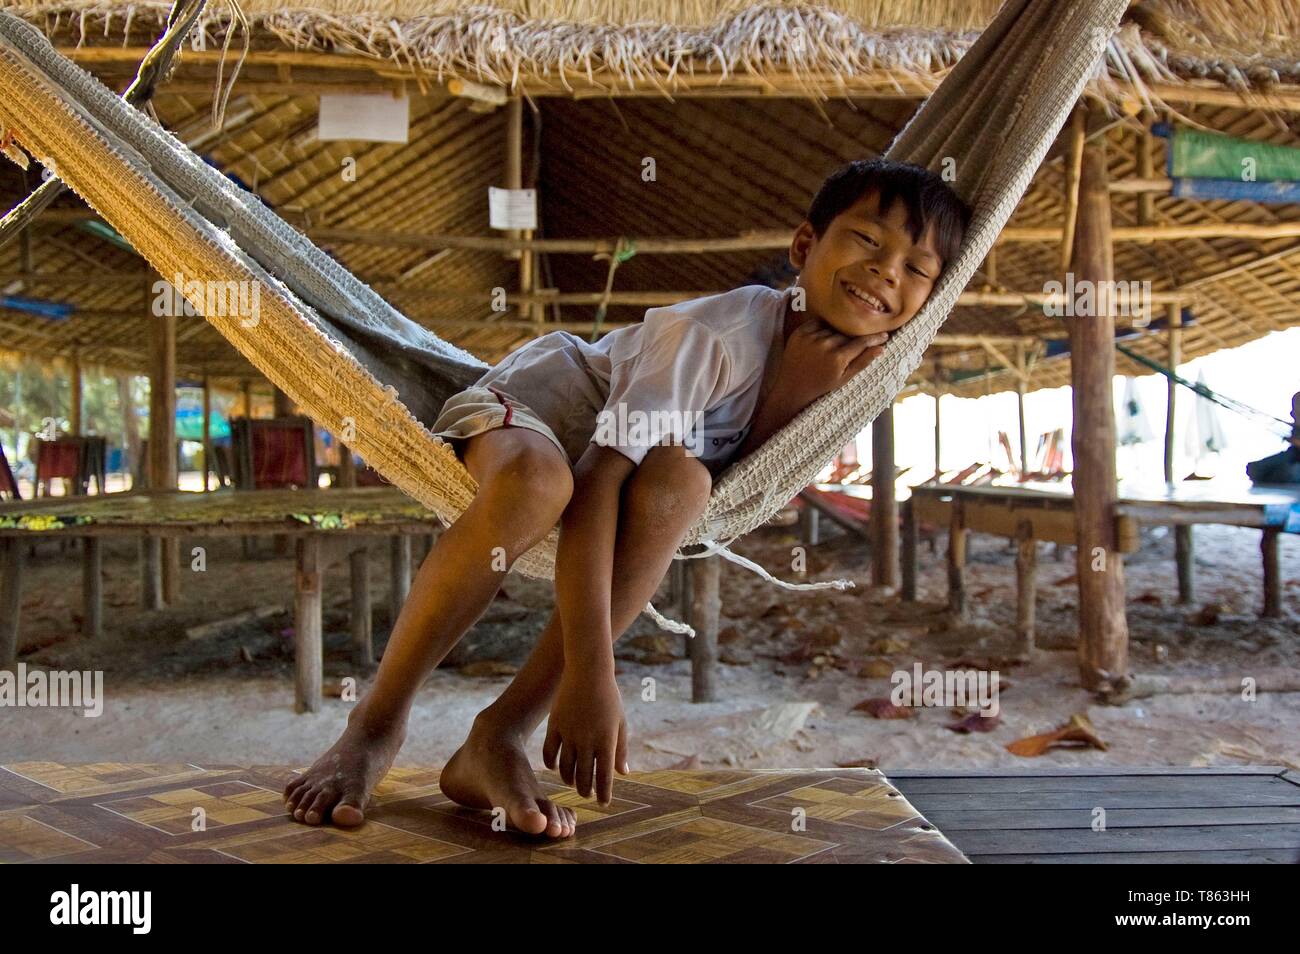 Cambodia, Sihanoukville or Preah Sihanouk, boy on a hammock Stock Photo